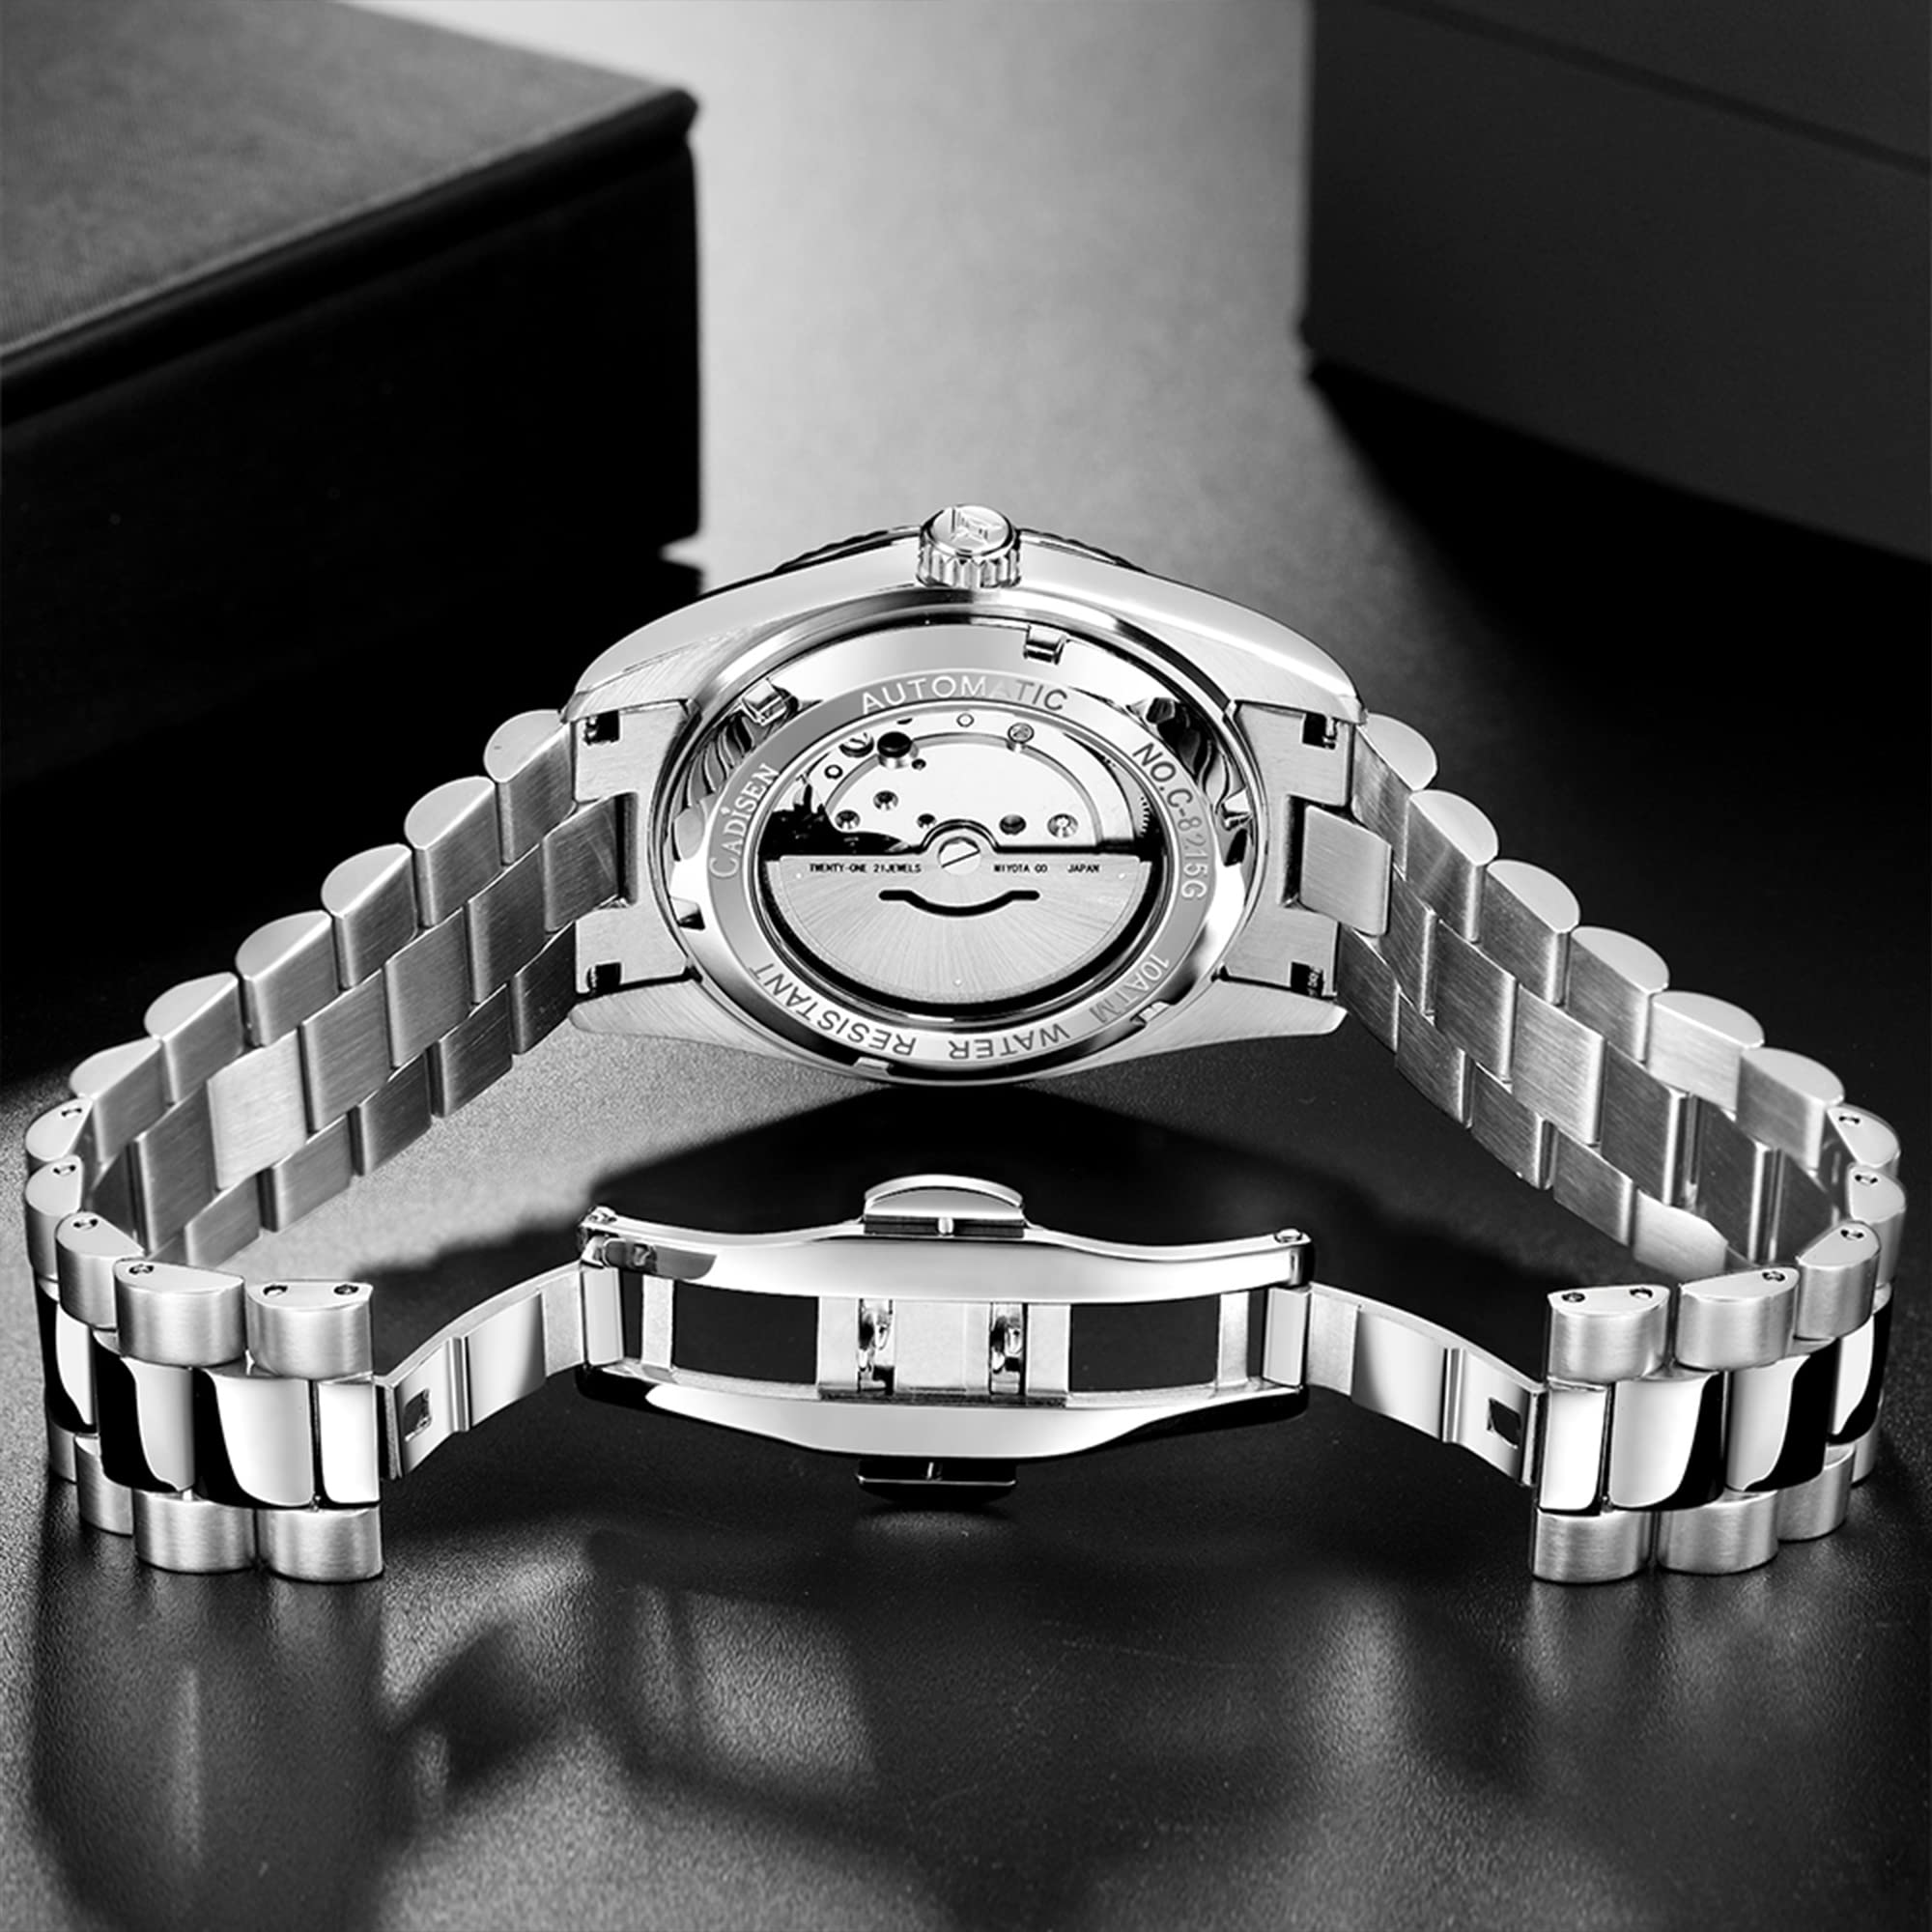 CADISEN Automatic Watches Men's Mechanical Business Waterproof Stainless Steel Wristwatch